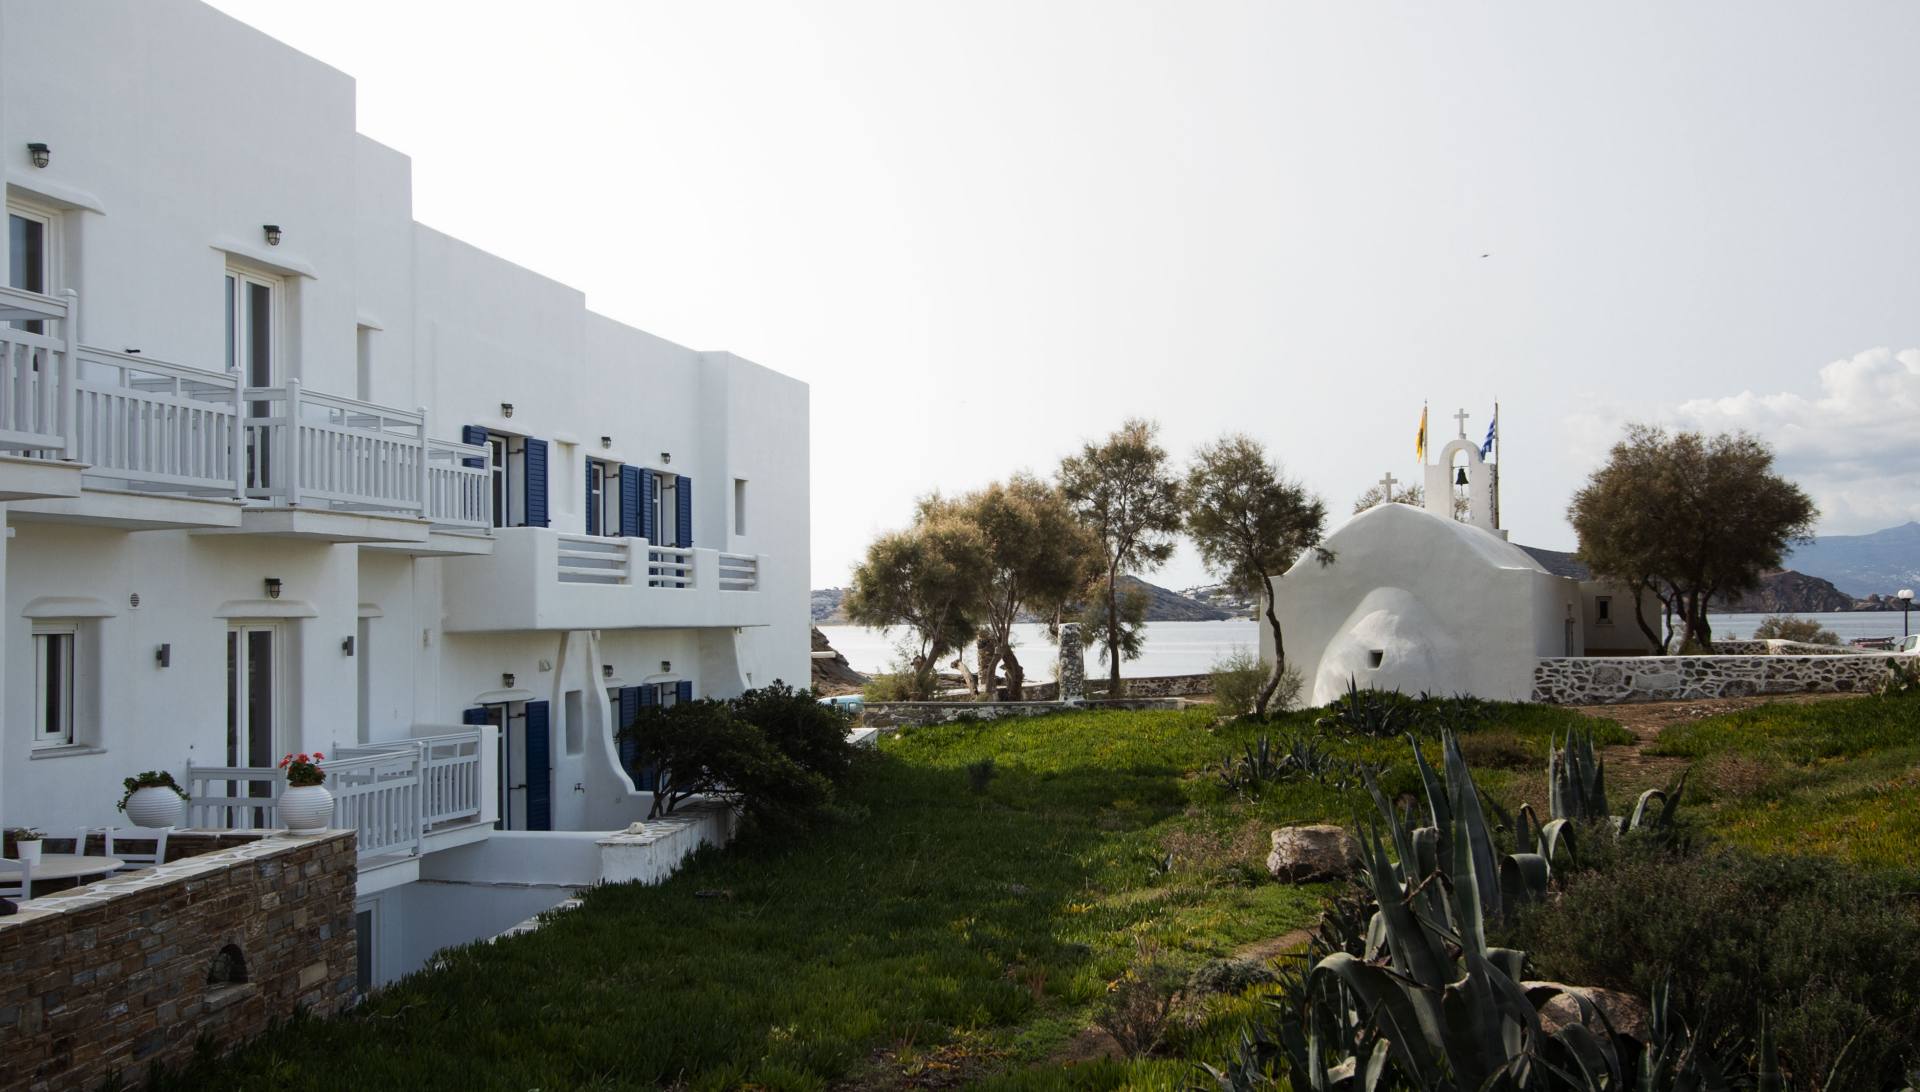 Galini Hotel in Naxos at Saint George Beach